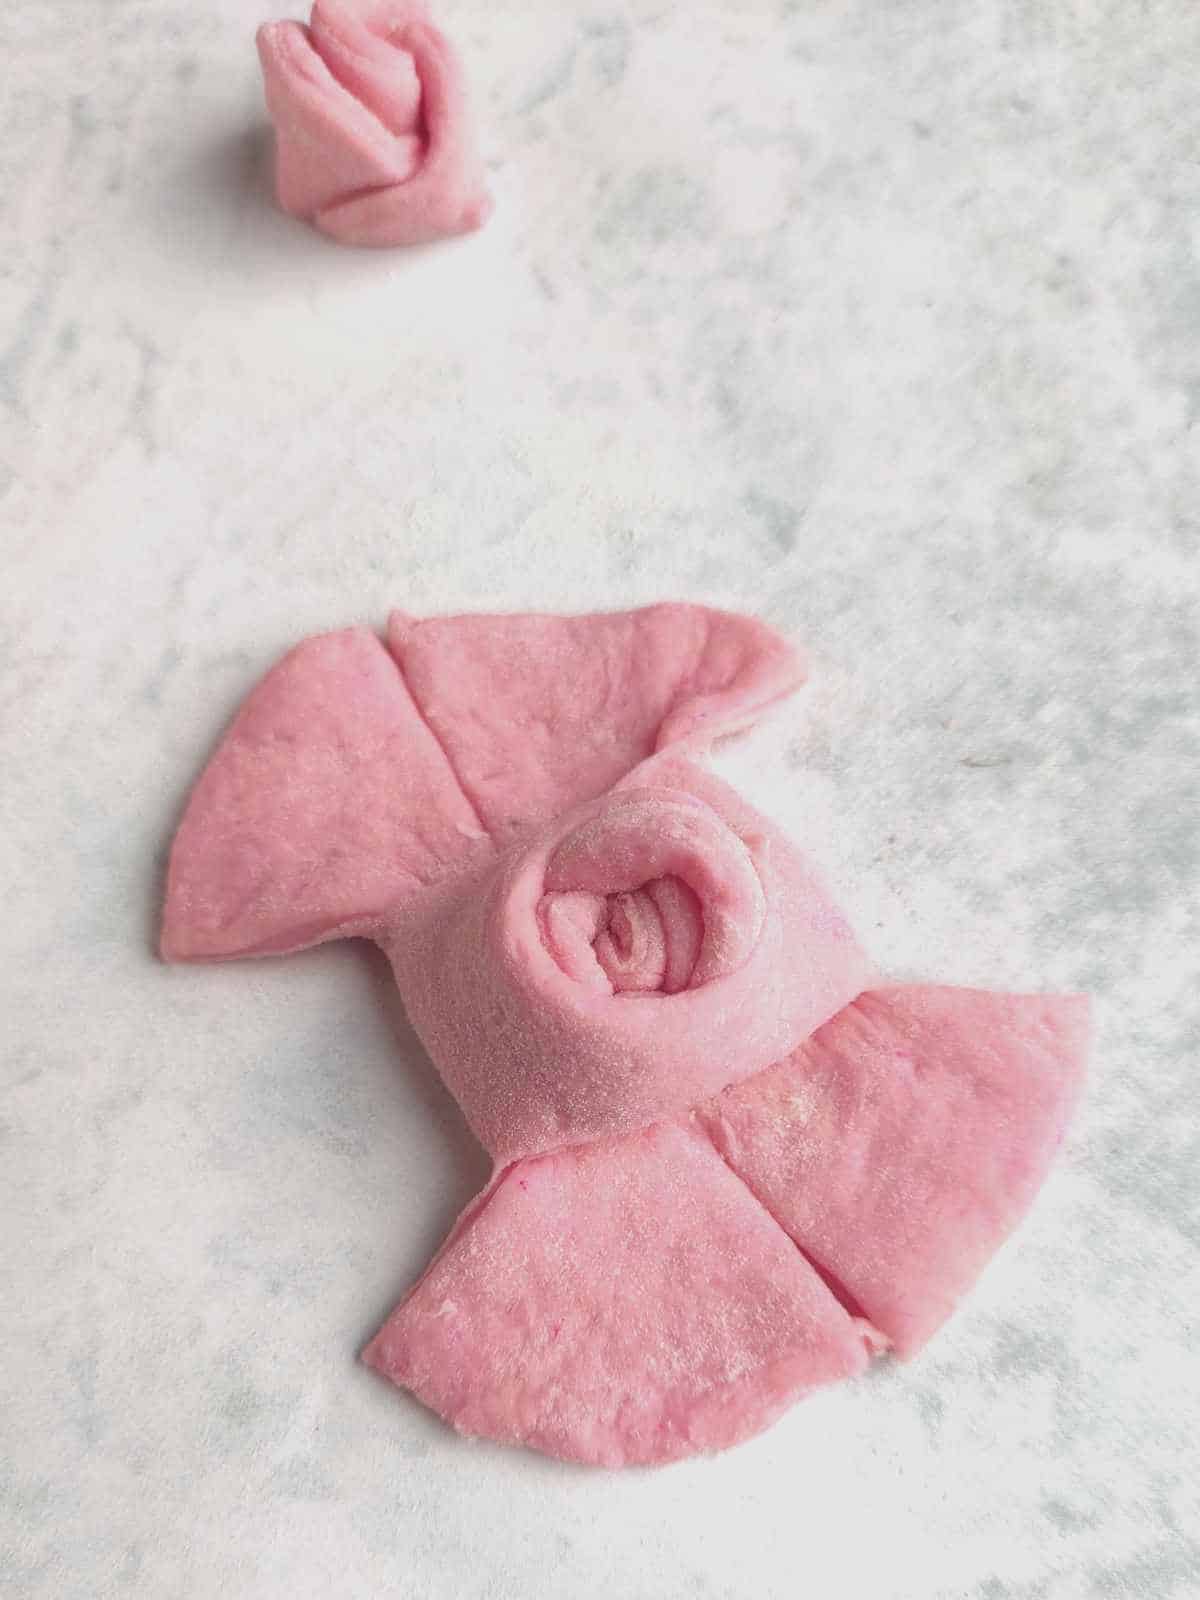 Pink mantou buns dough for shaping outer petals of dough rose bud.